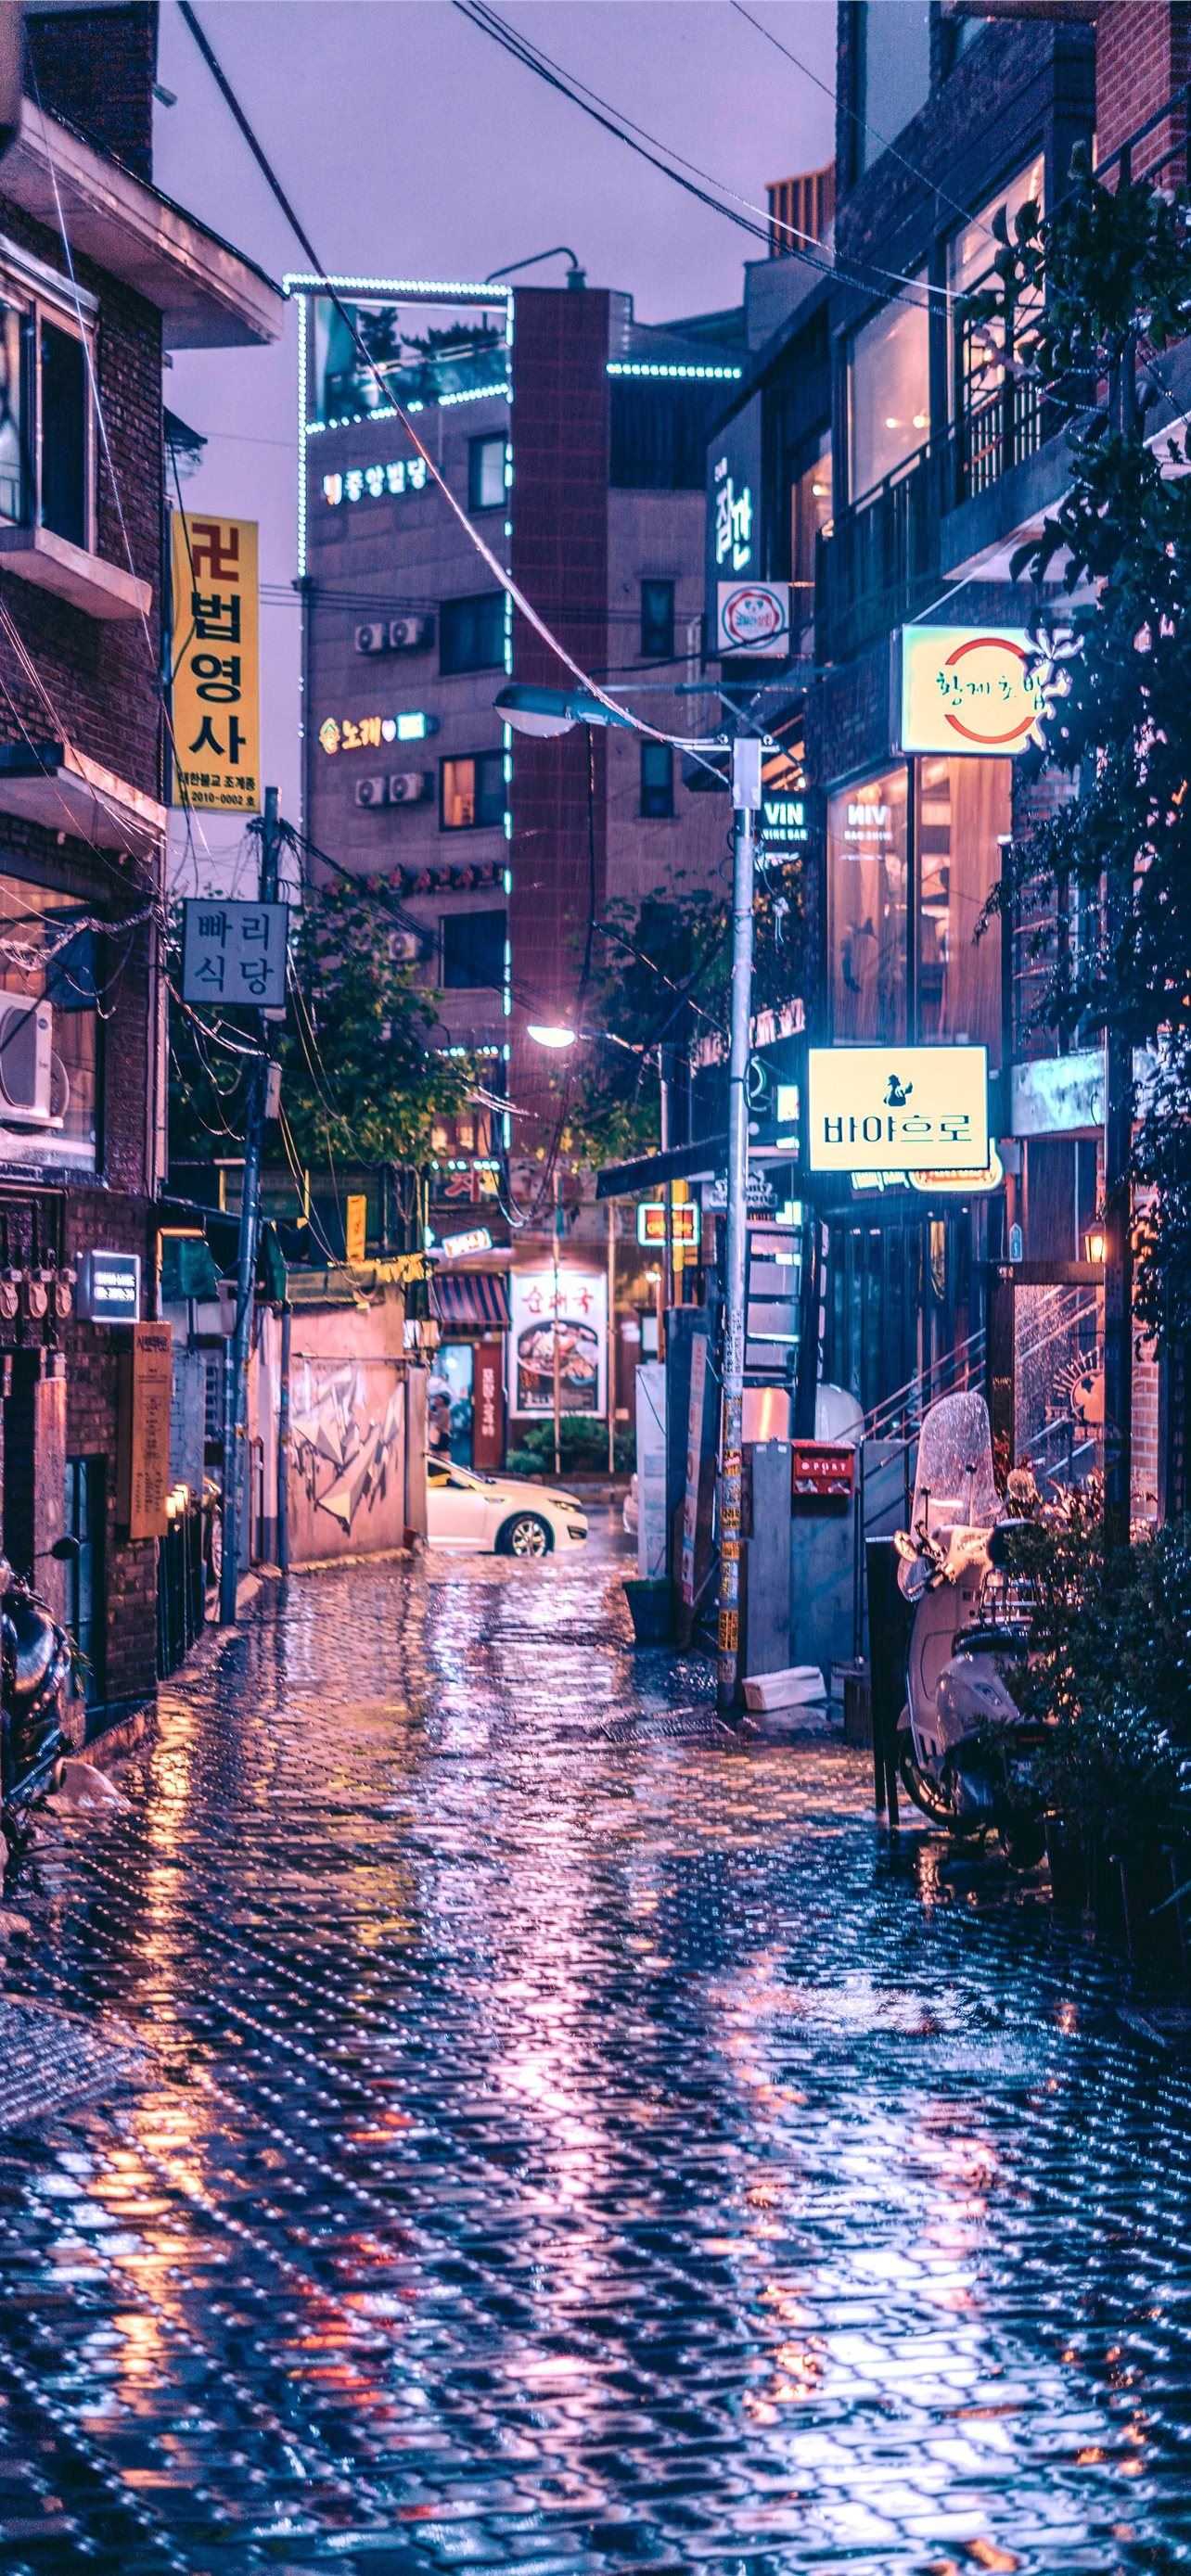 A city street with rain and buildings - Korean, Seoul